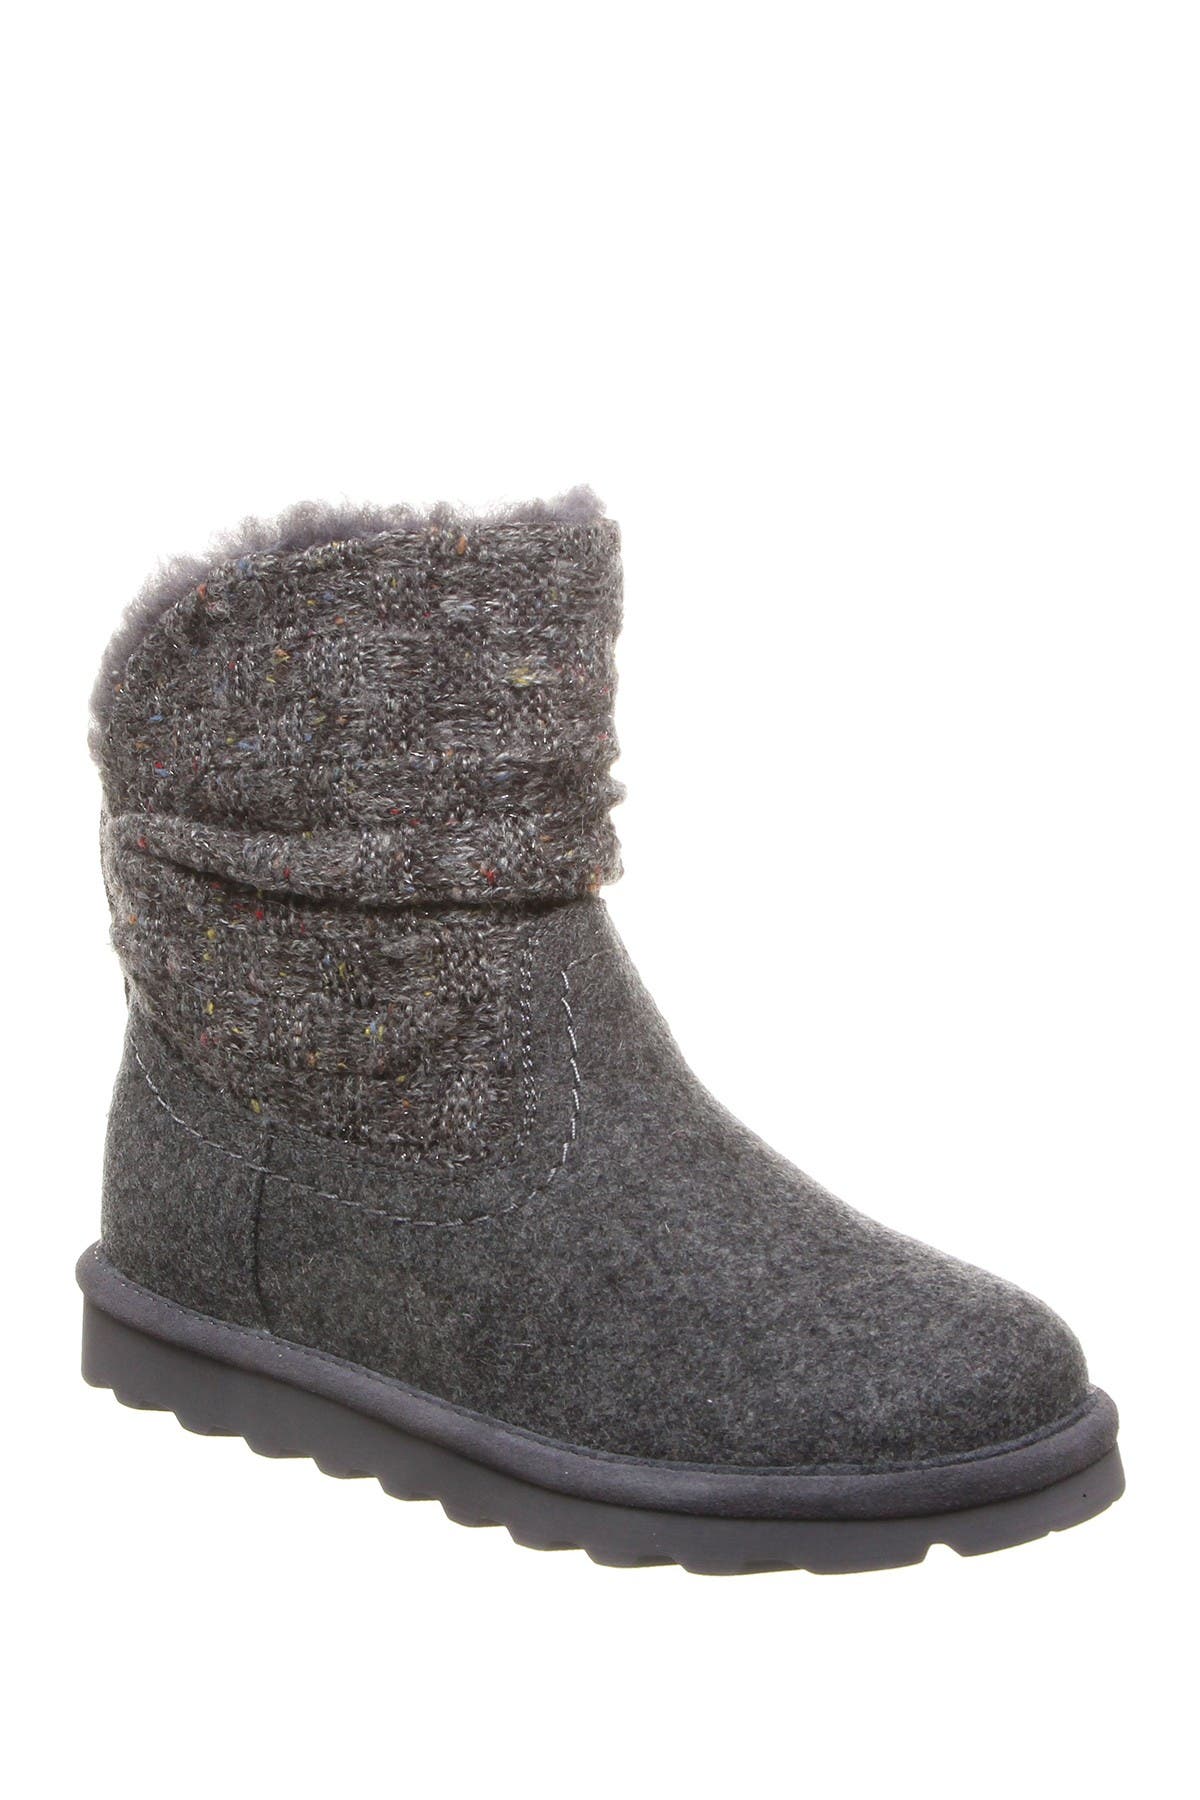 bearpaw knit boots